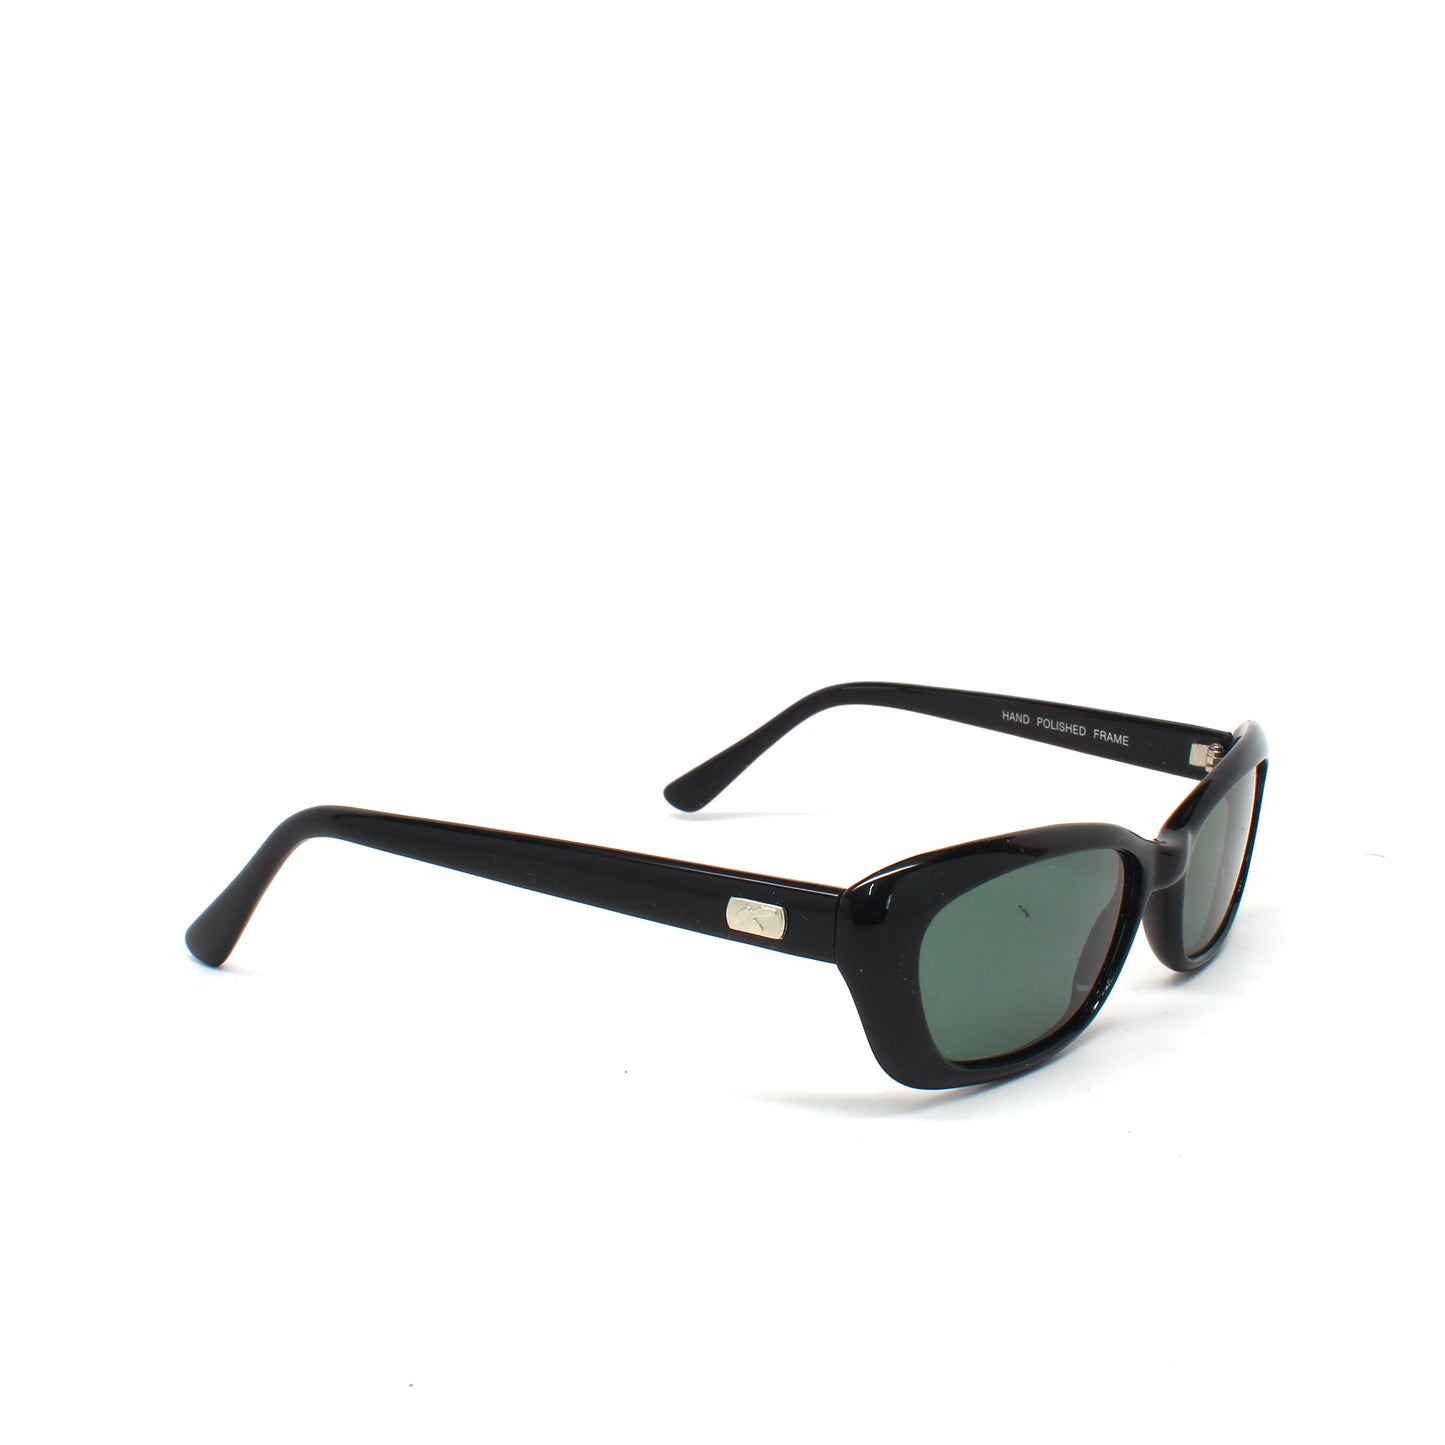 Vintage Small Sized 90s Mod Original Rectangle Sunglasses - Black